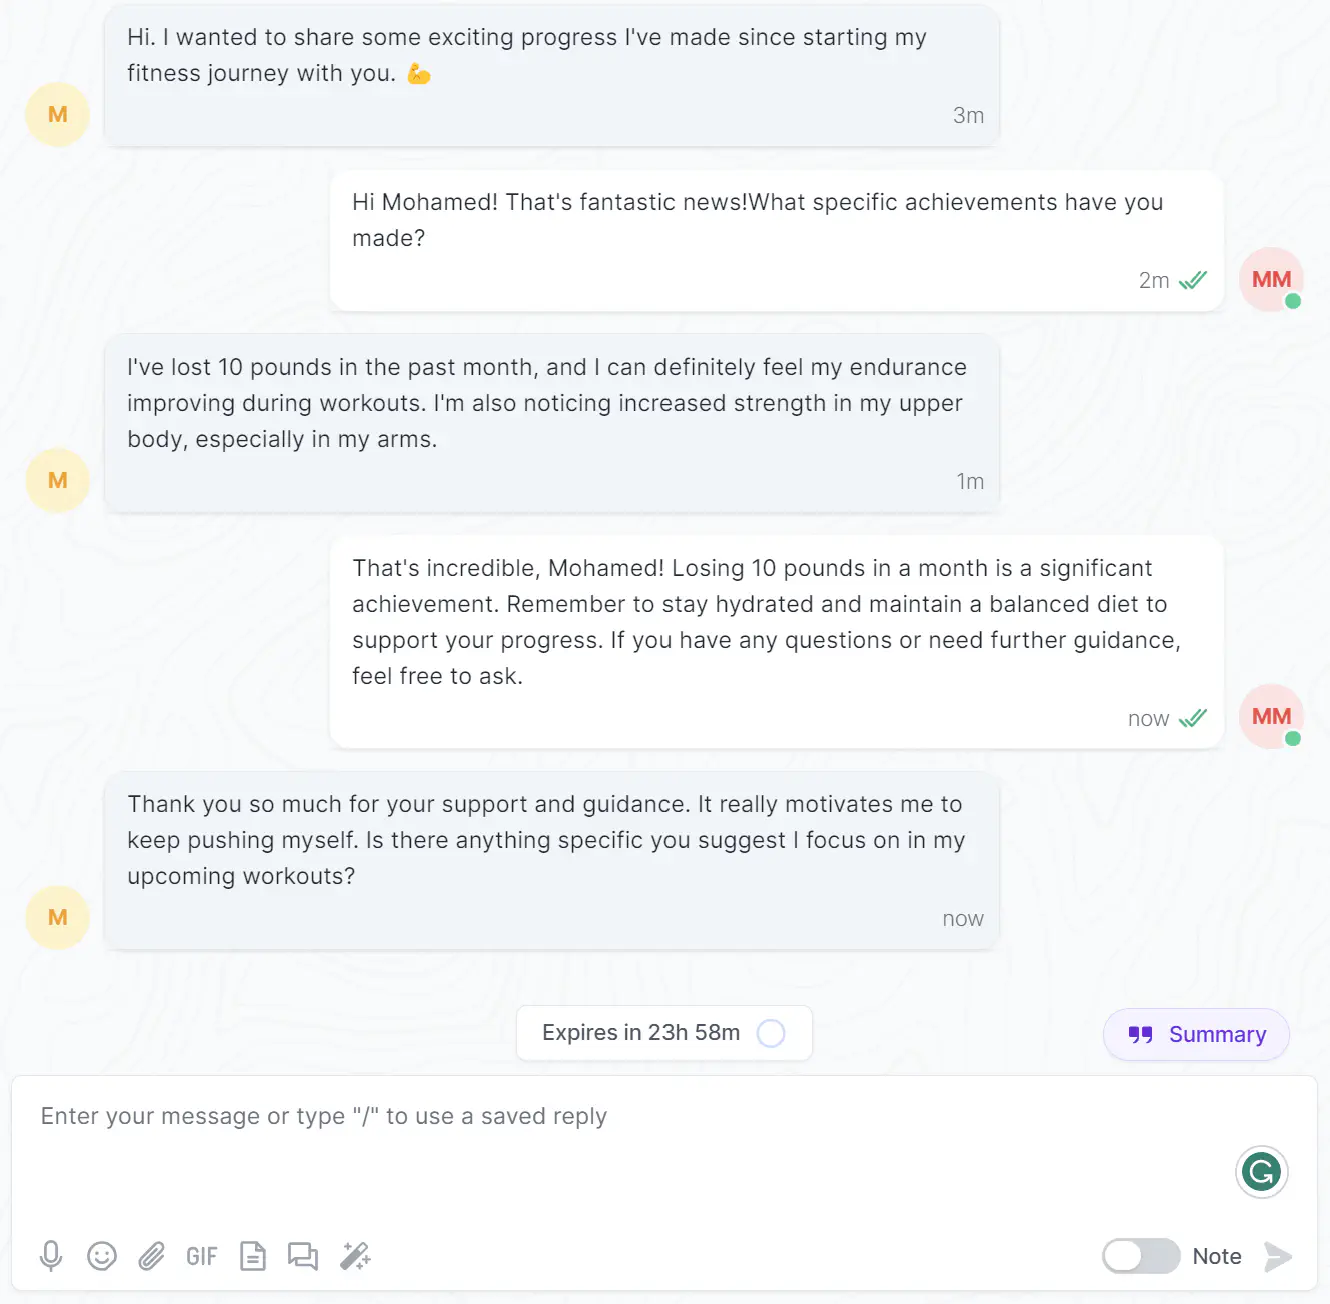 A WhatsApp conversation in Rasayel offering progress update and feedback